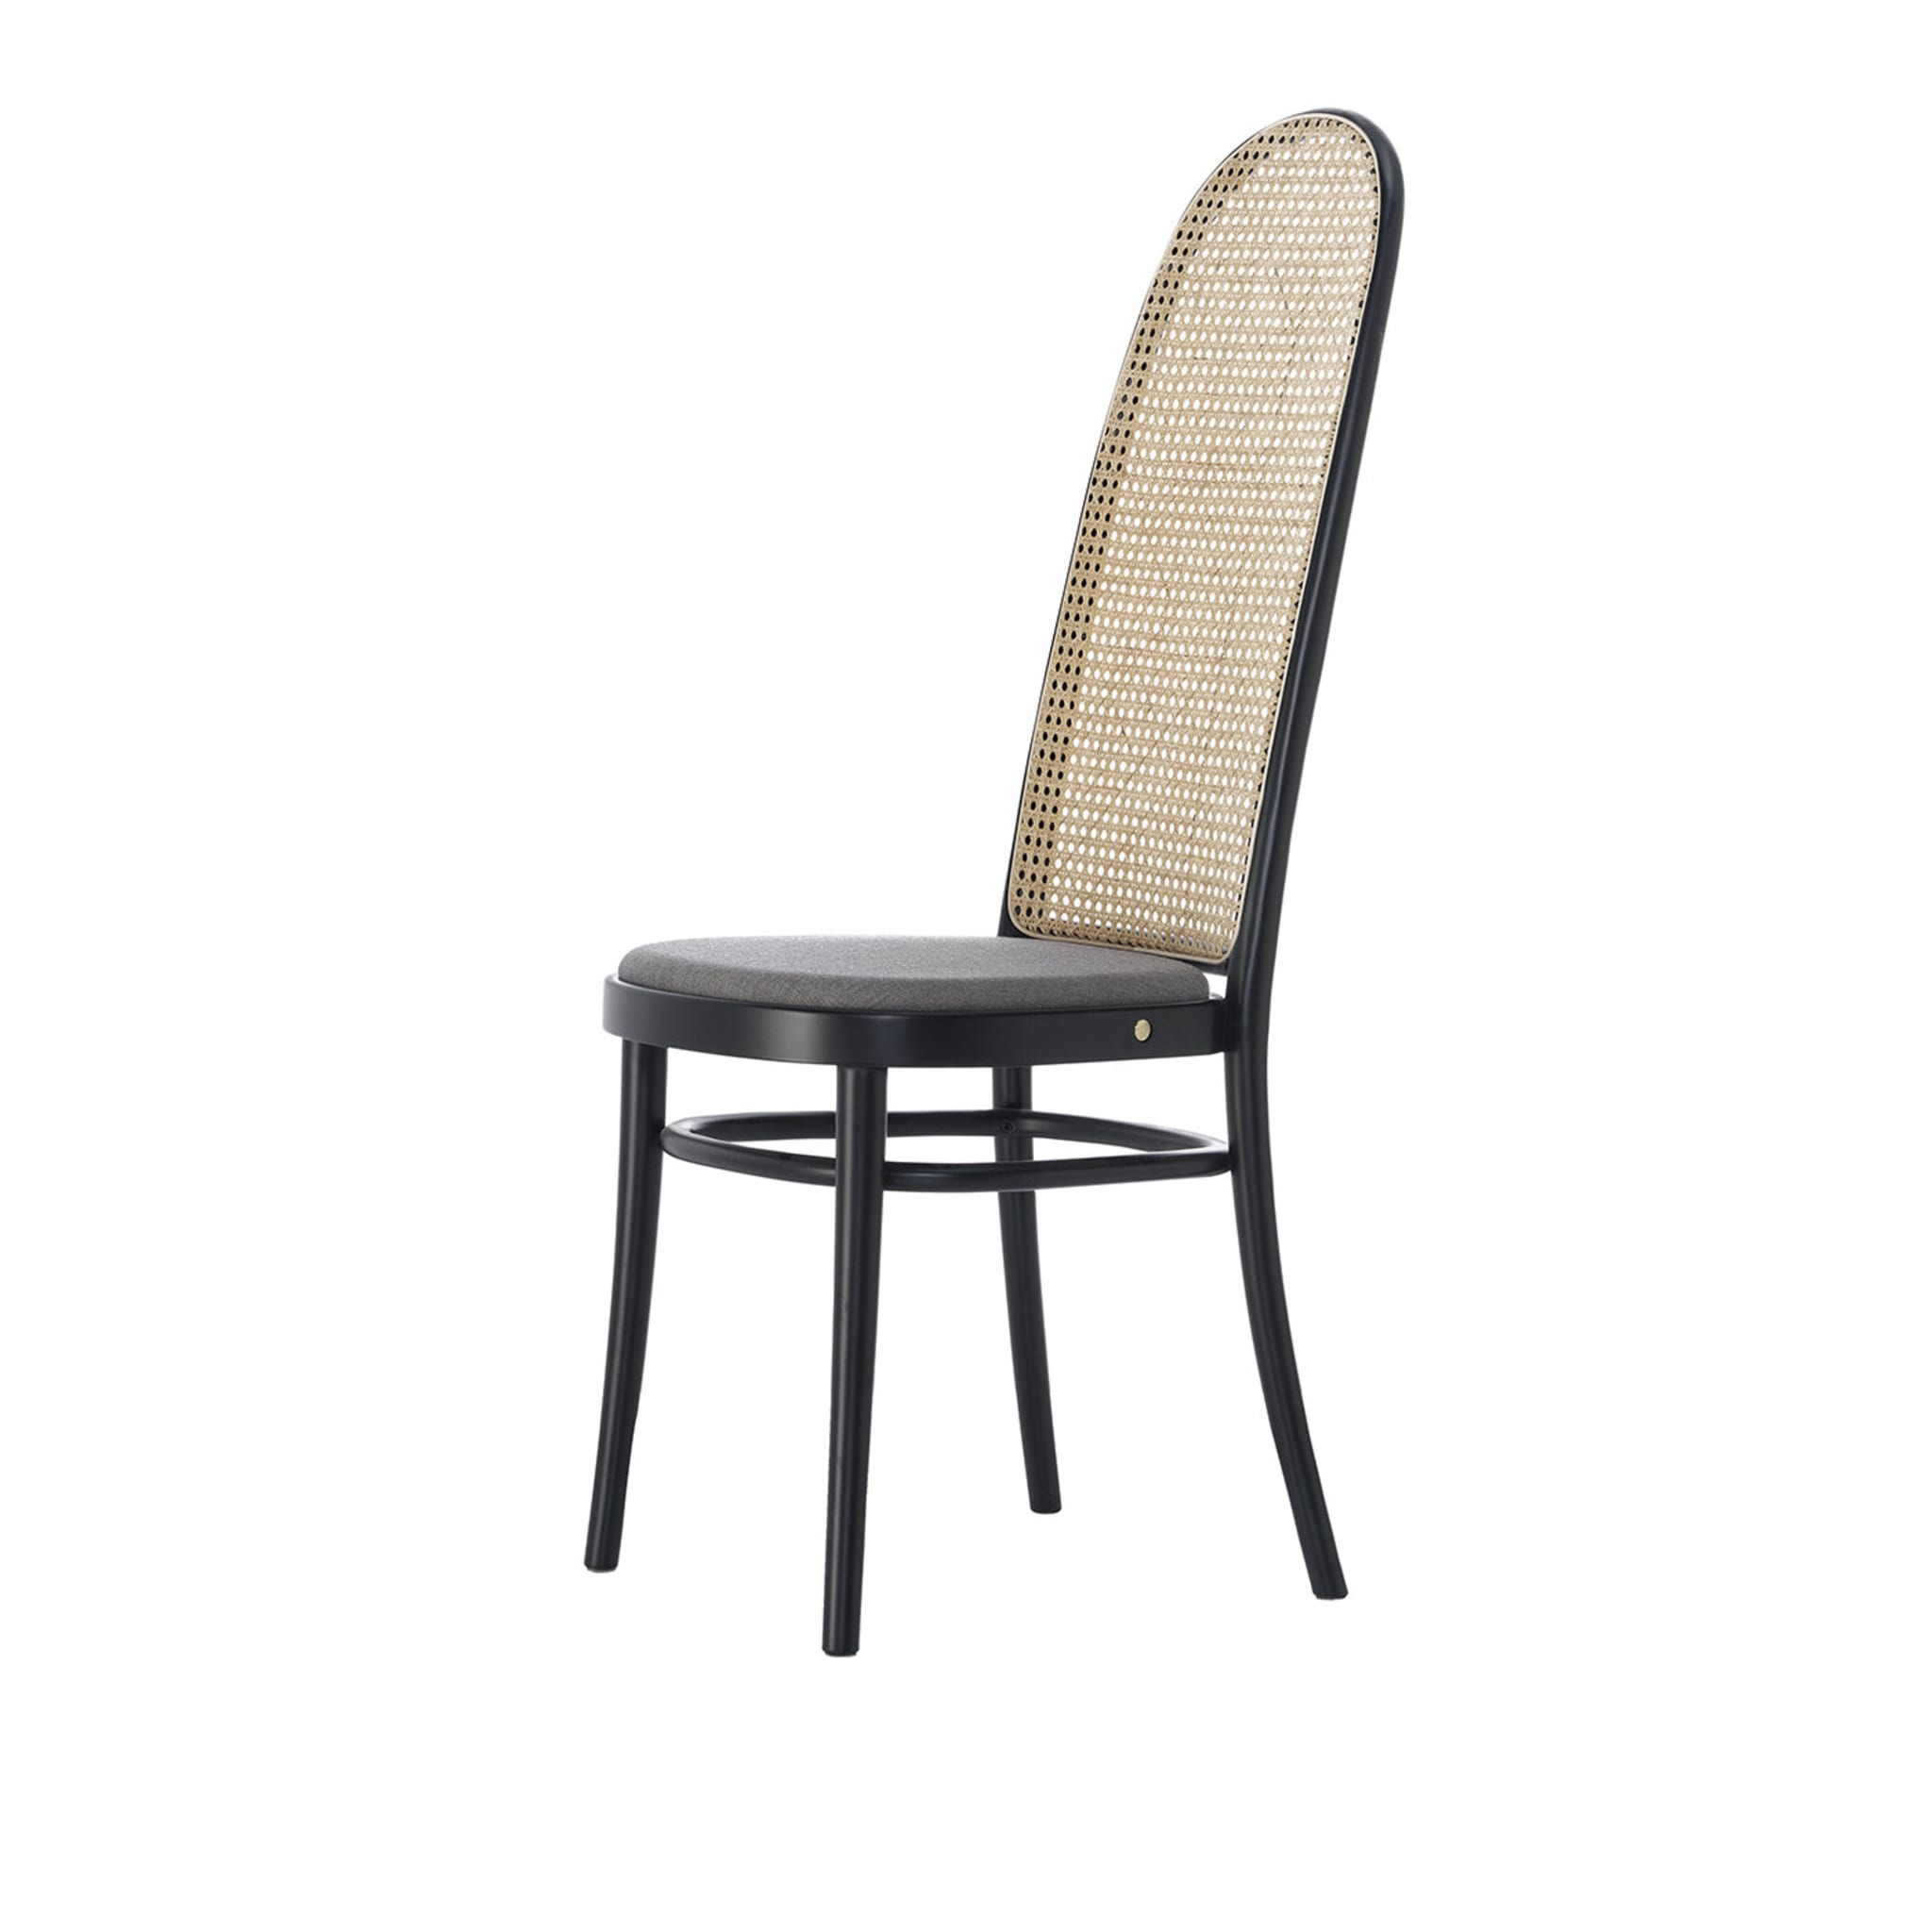 Morris Black Tall Chair by GamFratesi - Alternative view 1